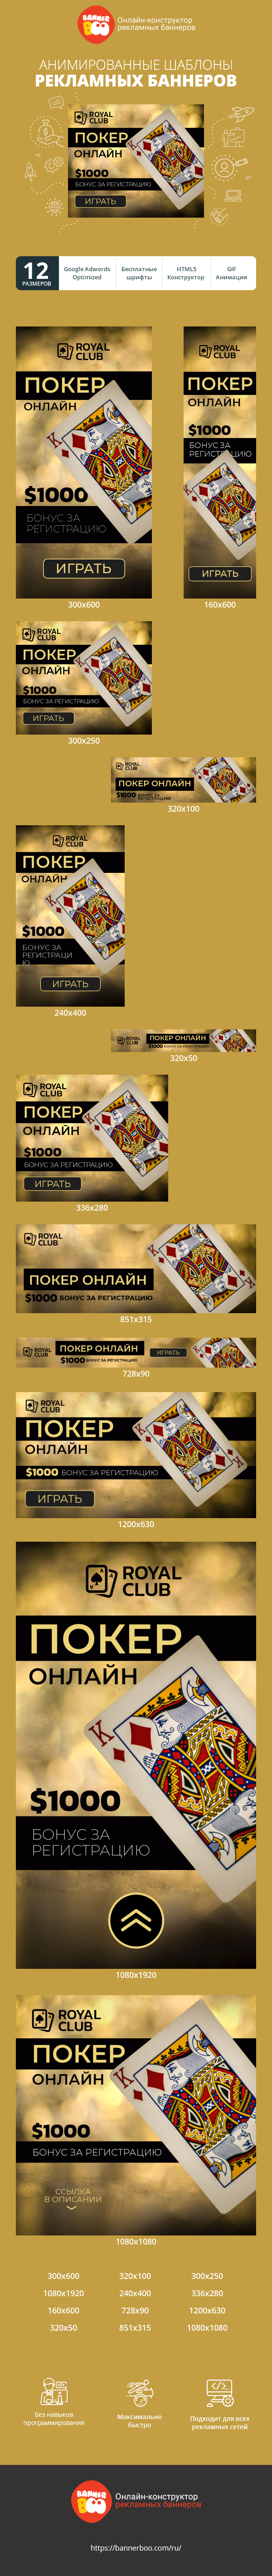 Шаблон рекламного баннера — Покер онлайн — $1000 бонус за регистрацию